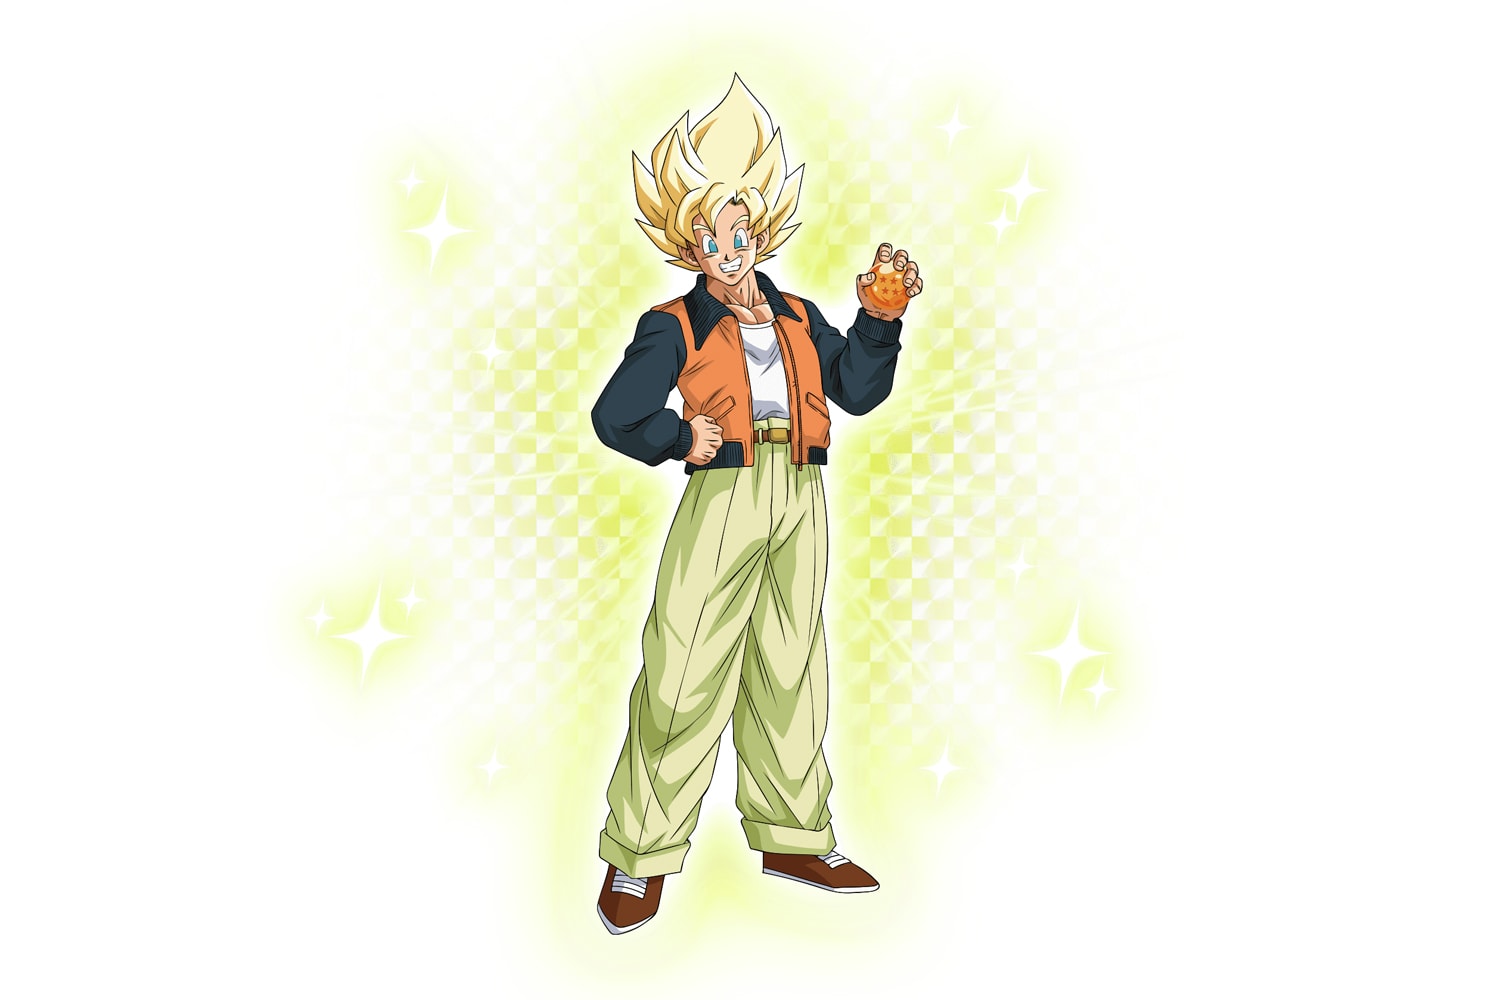 Goku Day Dragon Ball Top Outfit News Saiyan Cell Games Manga Anime Dragon Ball Z Toei Bird studios Japan toys 